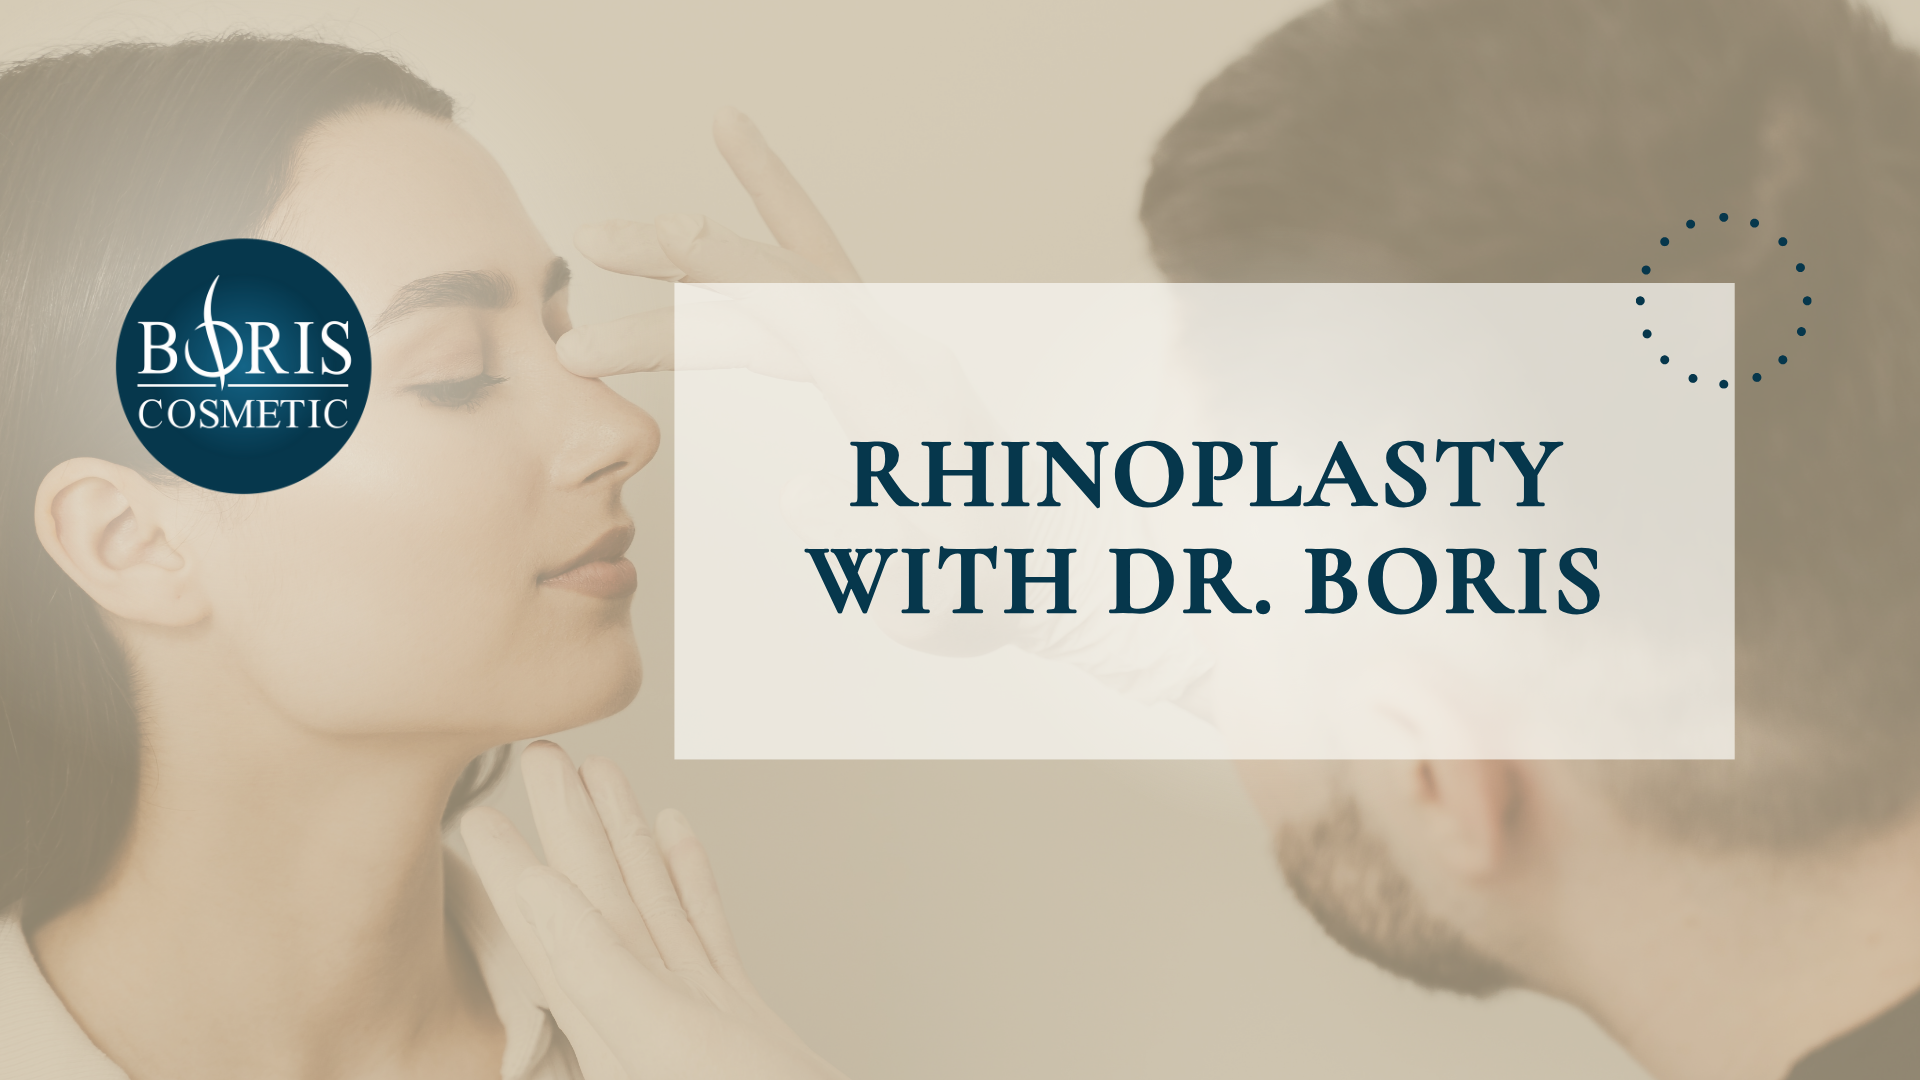 Rhinoplasty with Dr. Boris at Boris Cosmetic